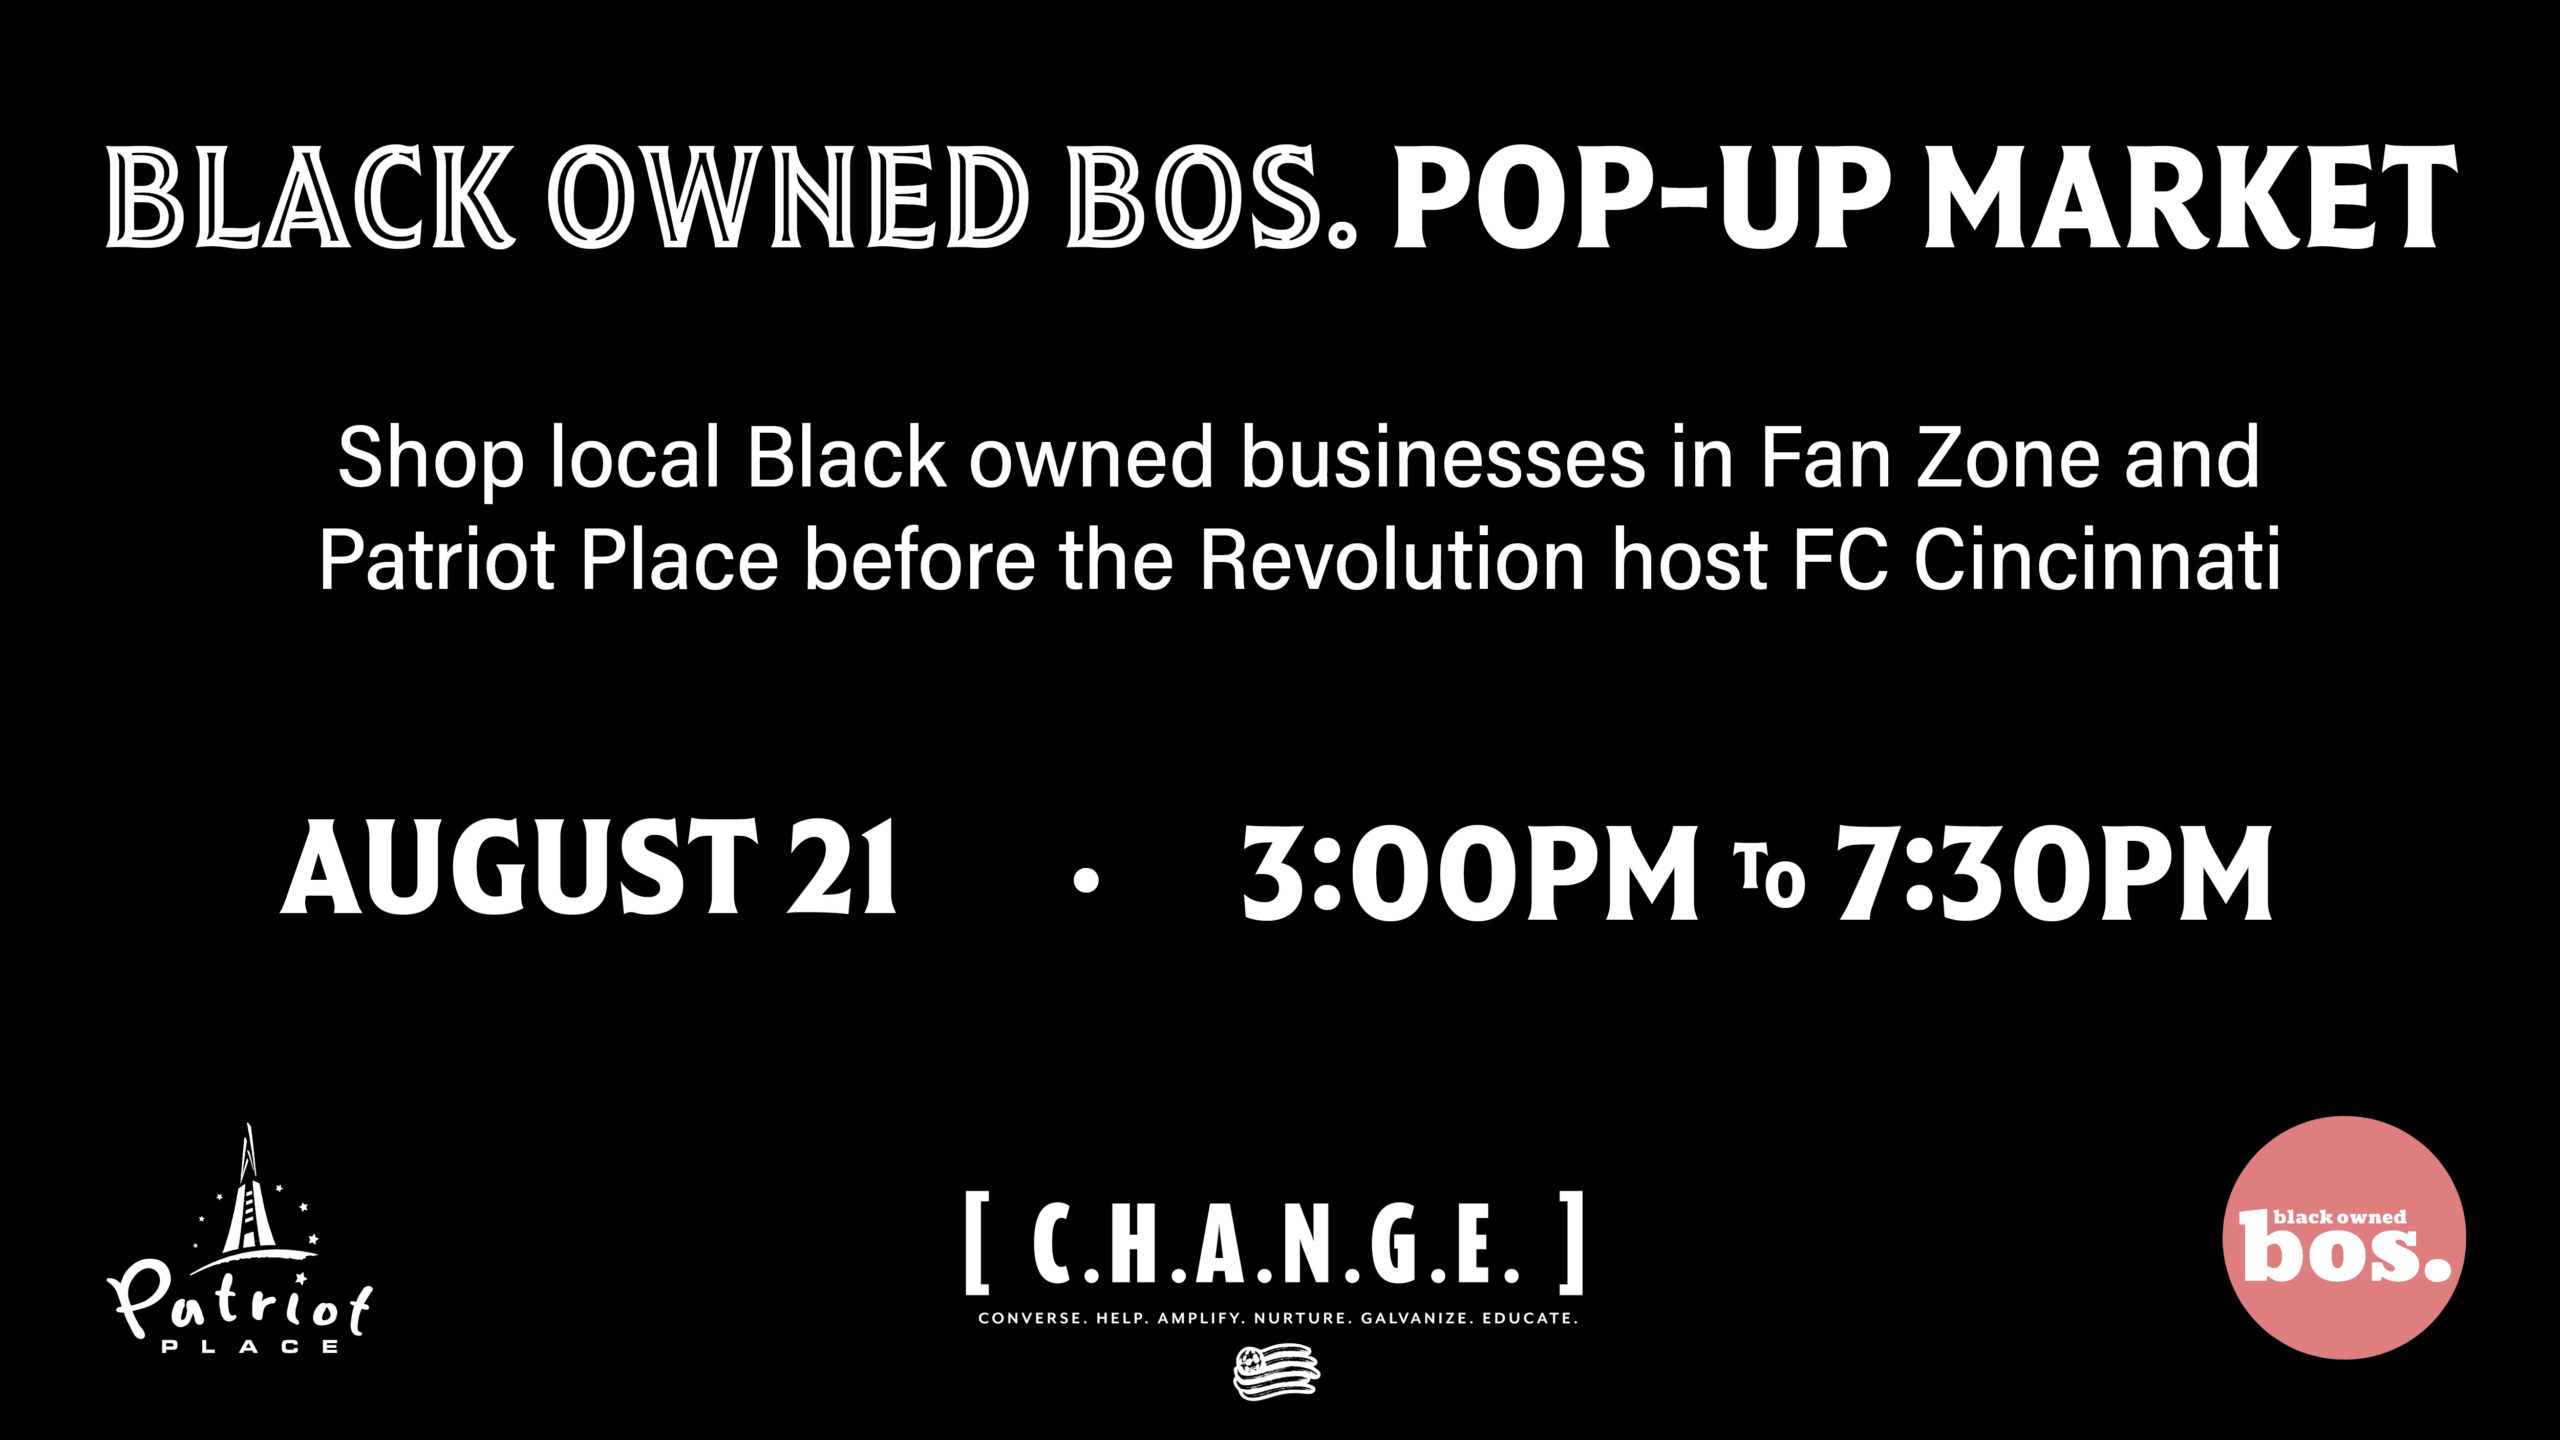 Black Owned Boston Pop-up Market